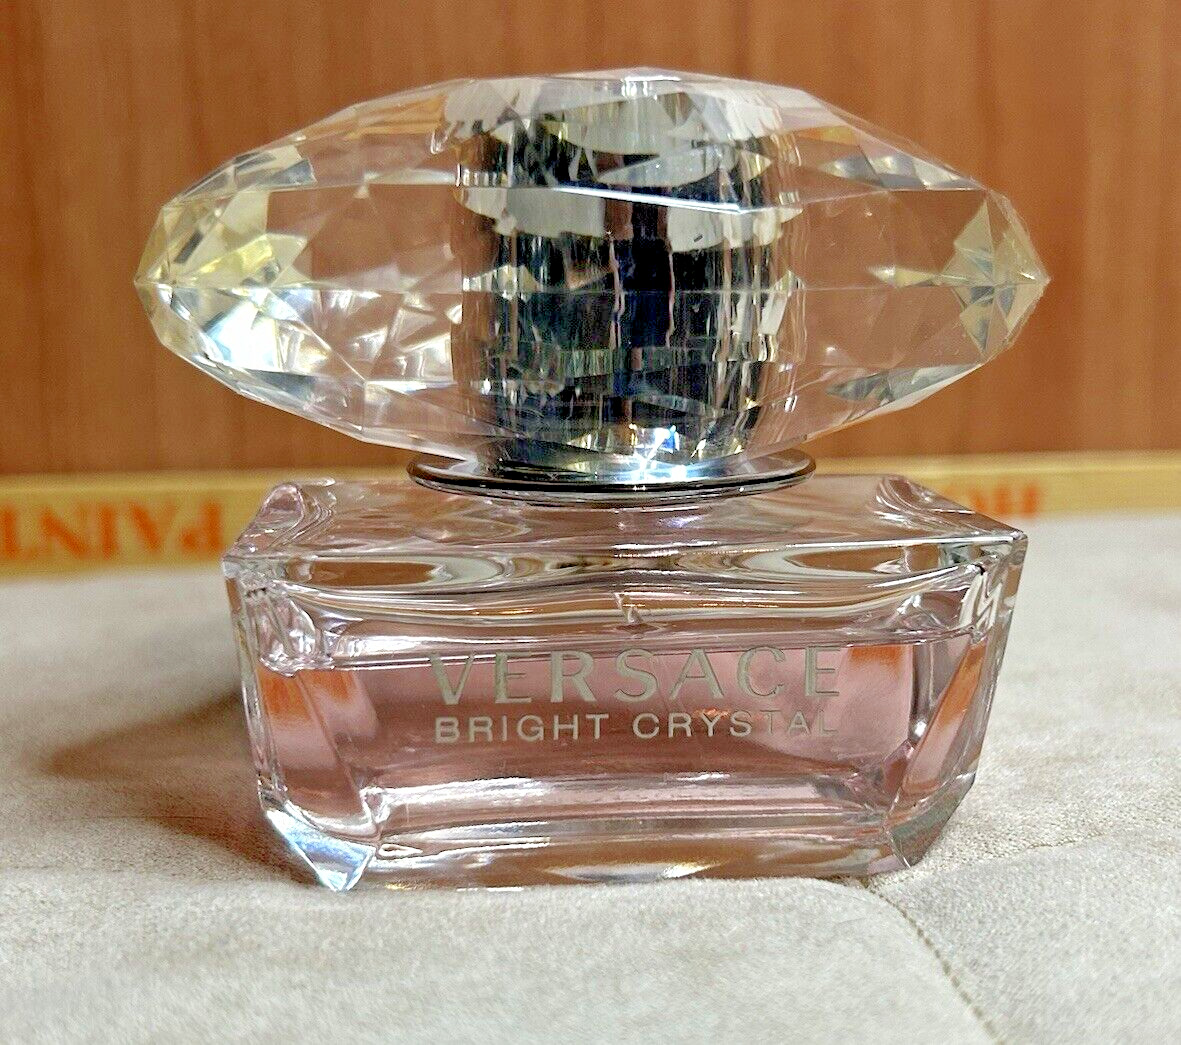 Versace Bright Crystal Eau De Toilette Perfume Spray 1.7 fl oz/ 50 mL 80%